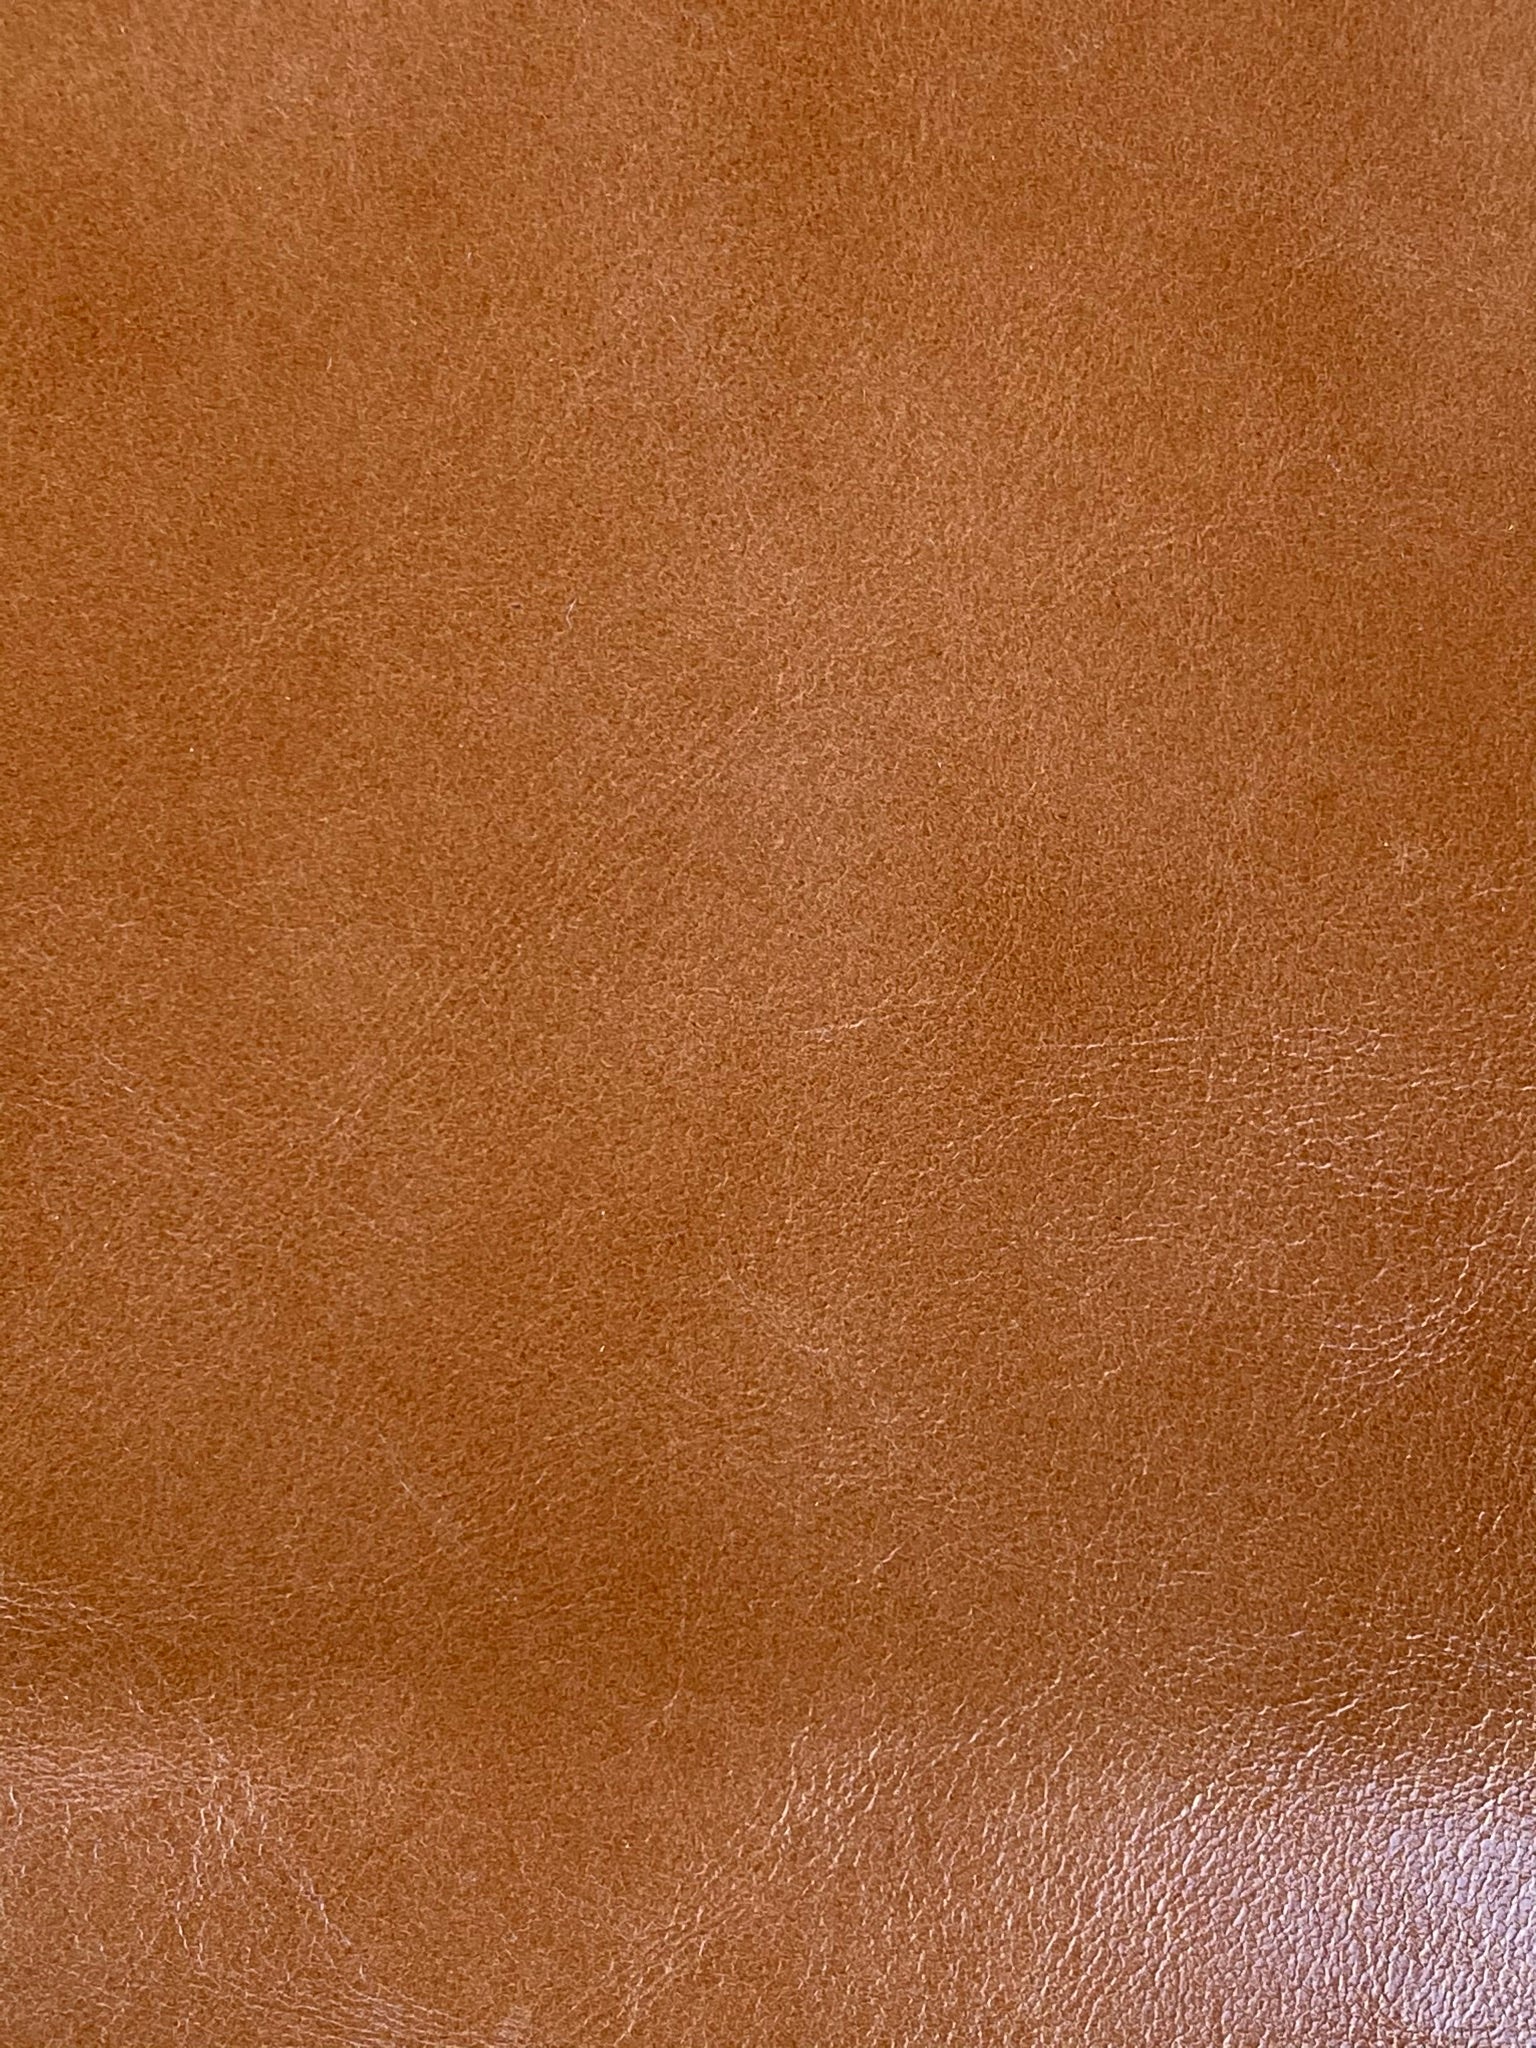 Napa Leather Light Brown